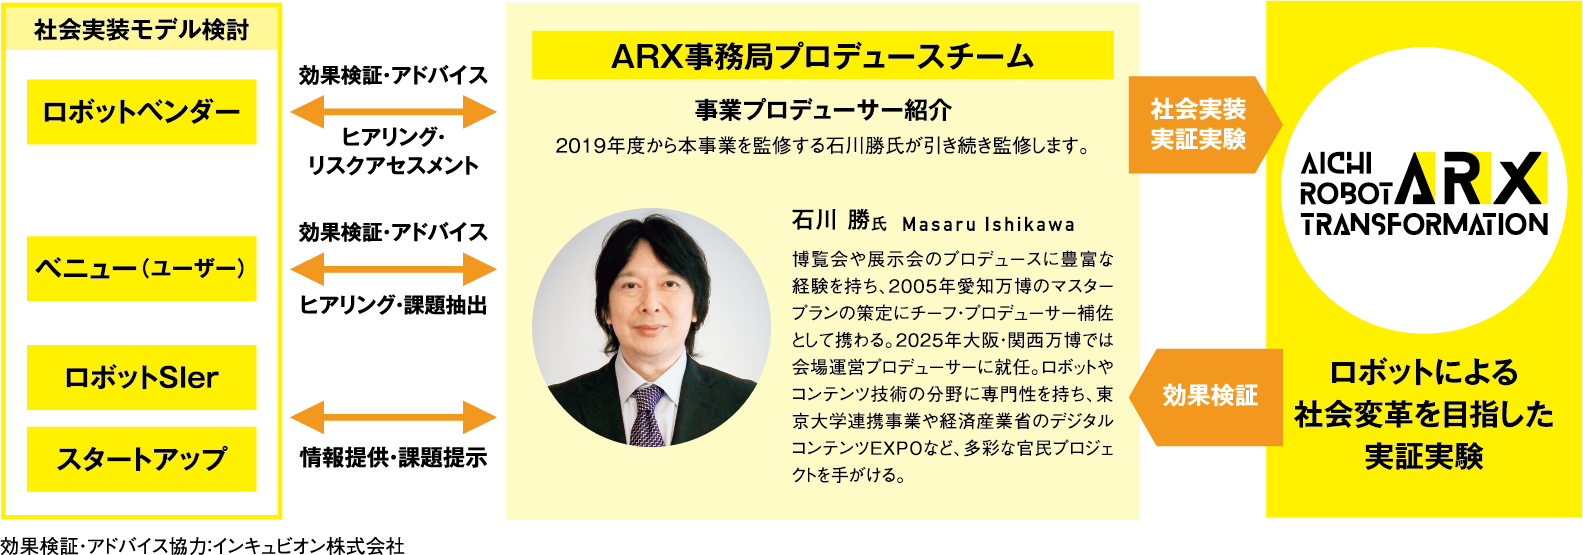 ARX 愛知県 サービスロボット社会実装推進事業